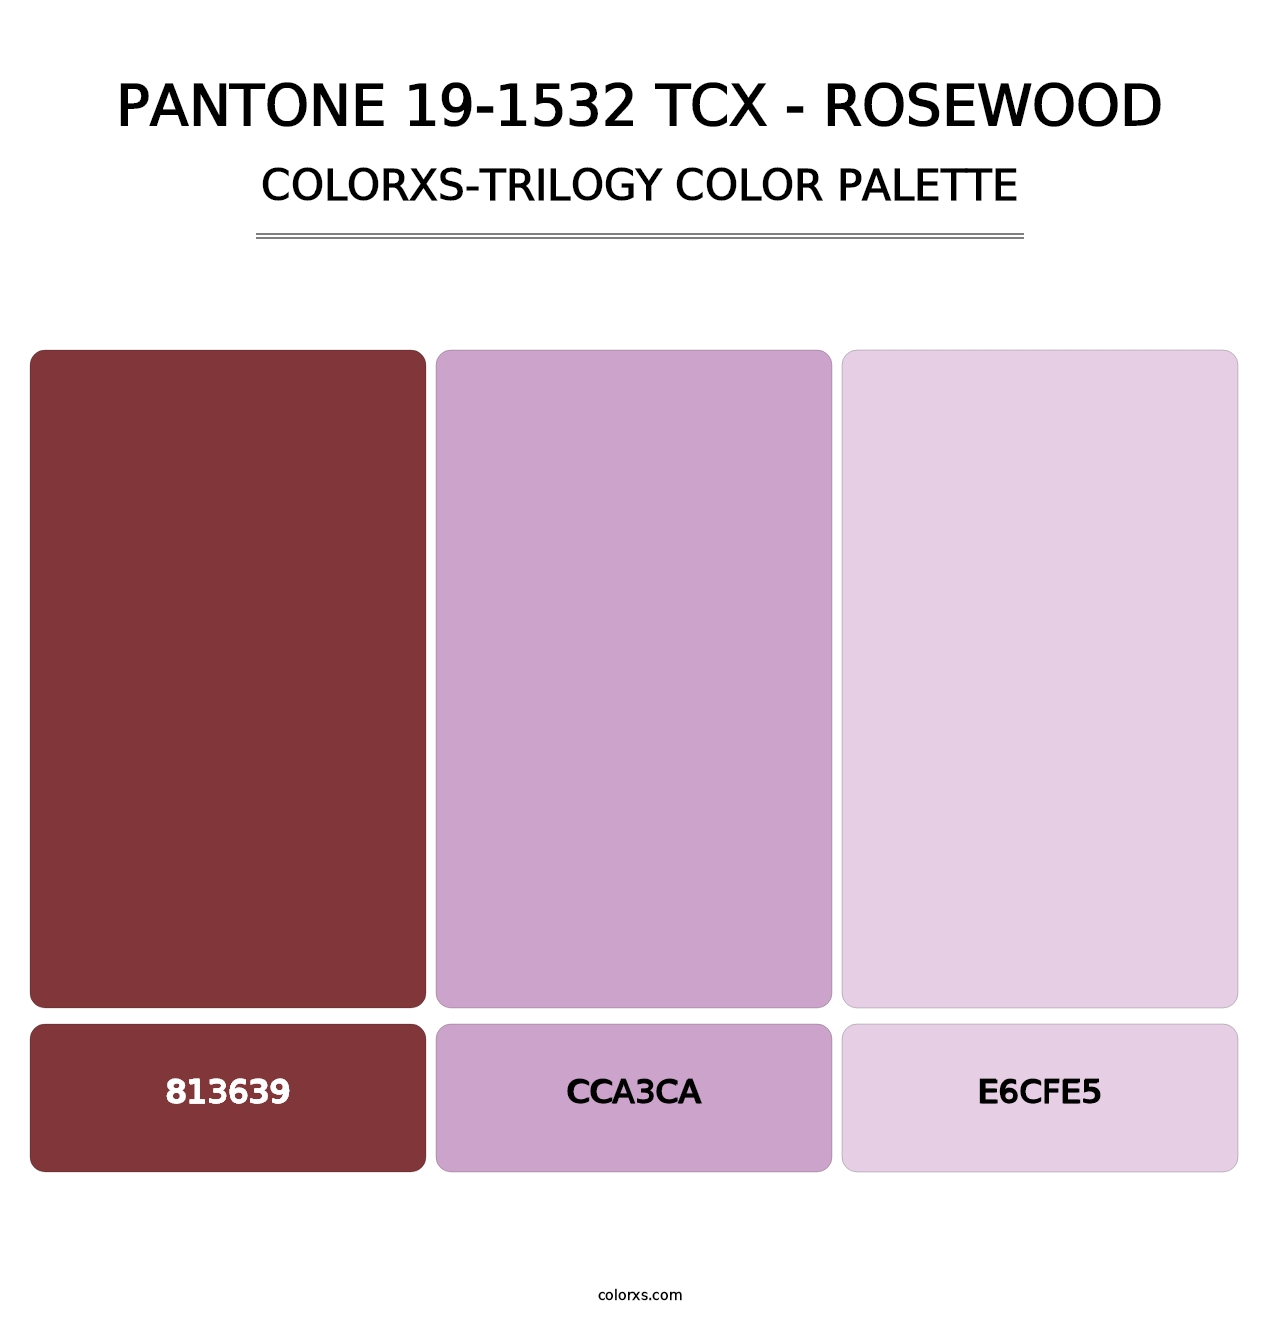 PANTONE 19-1532 TCX - Rosewood - Colorxs Trilogy Palette